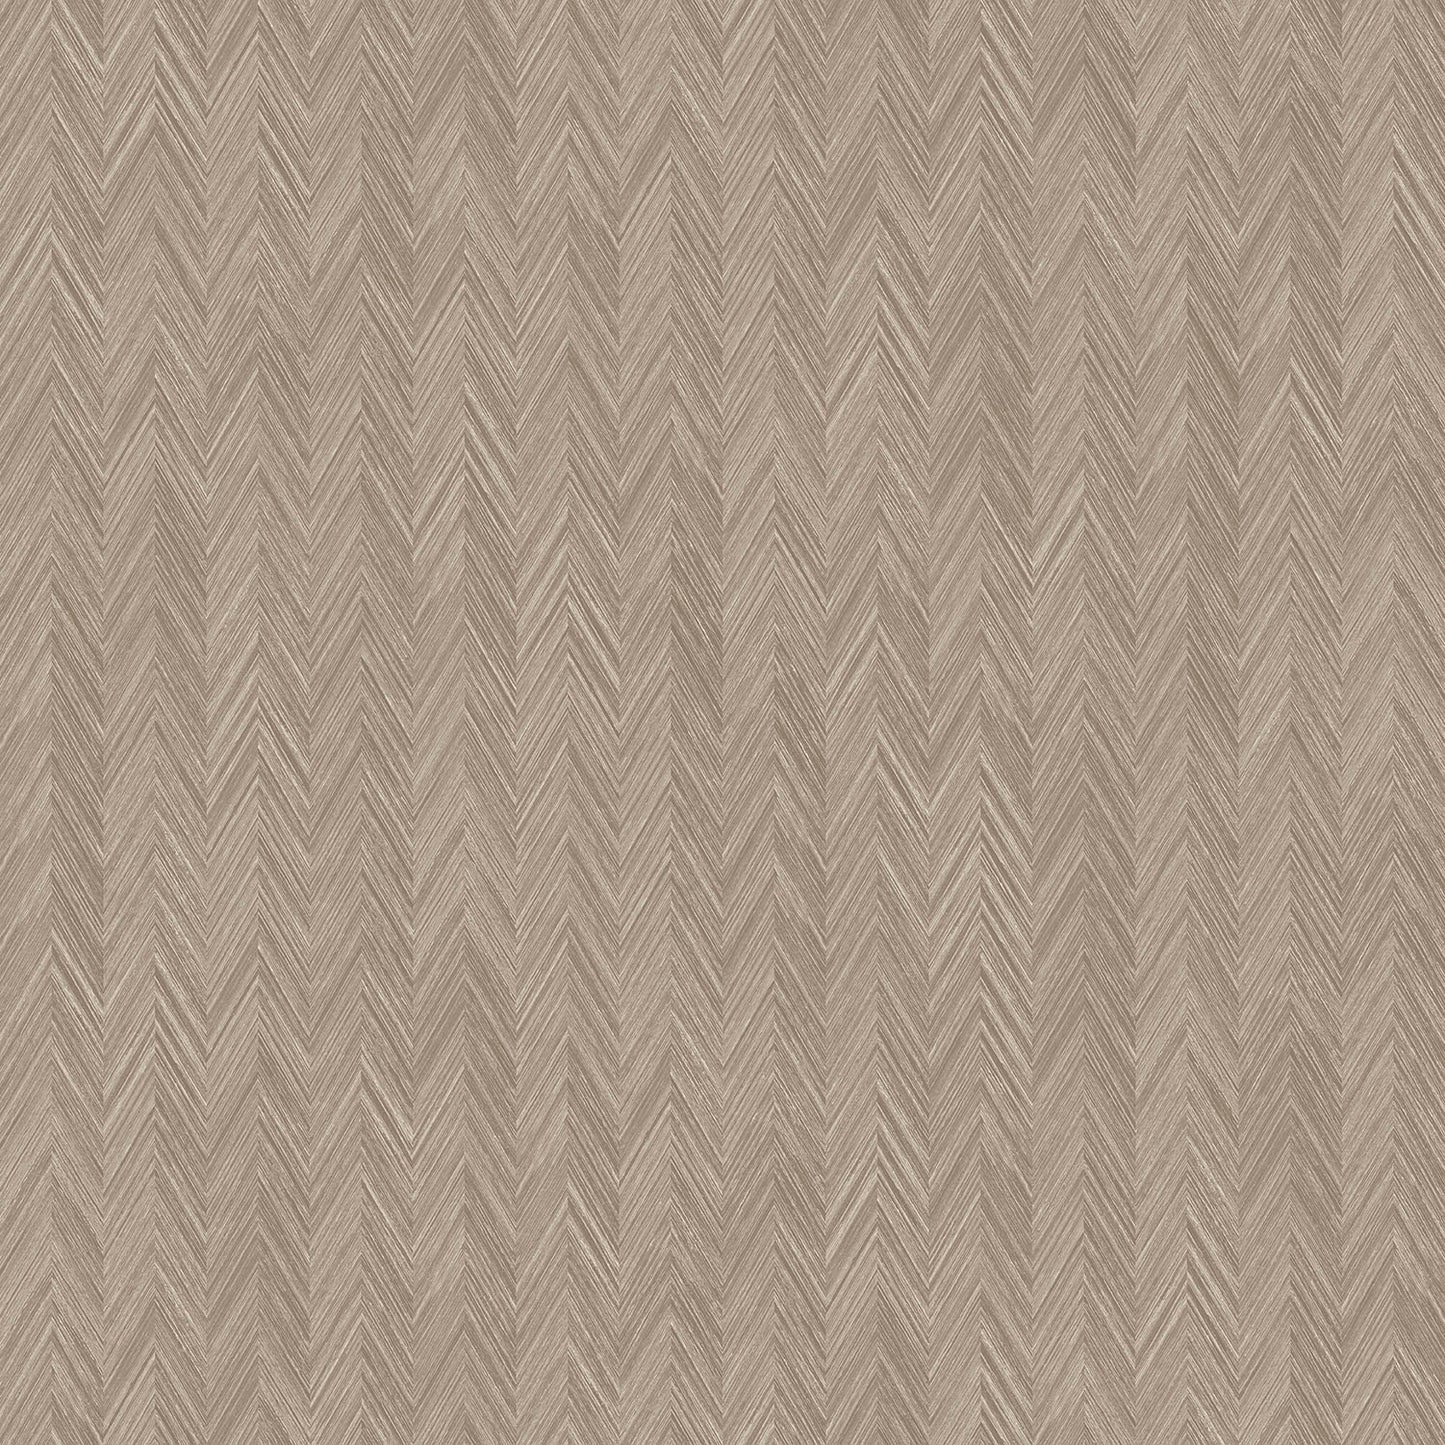 Texture FX Wallpaper Fiber Weave - Crockers Paint & Wallpaper